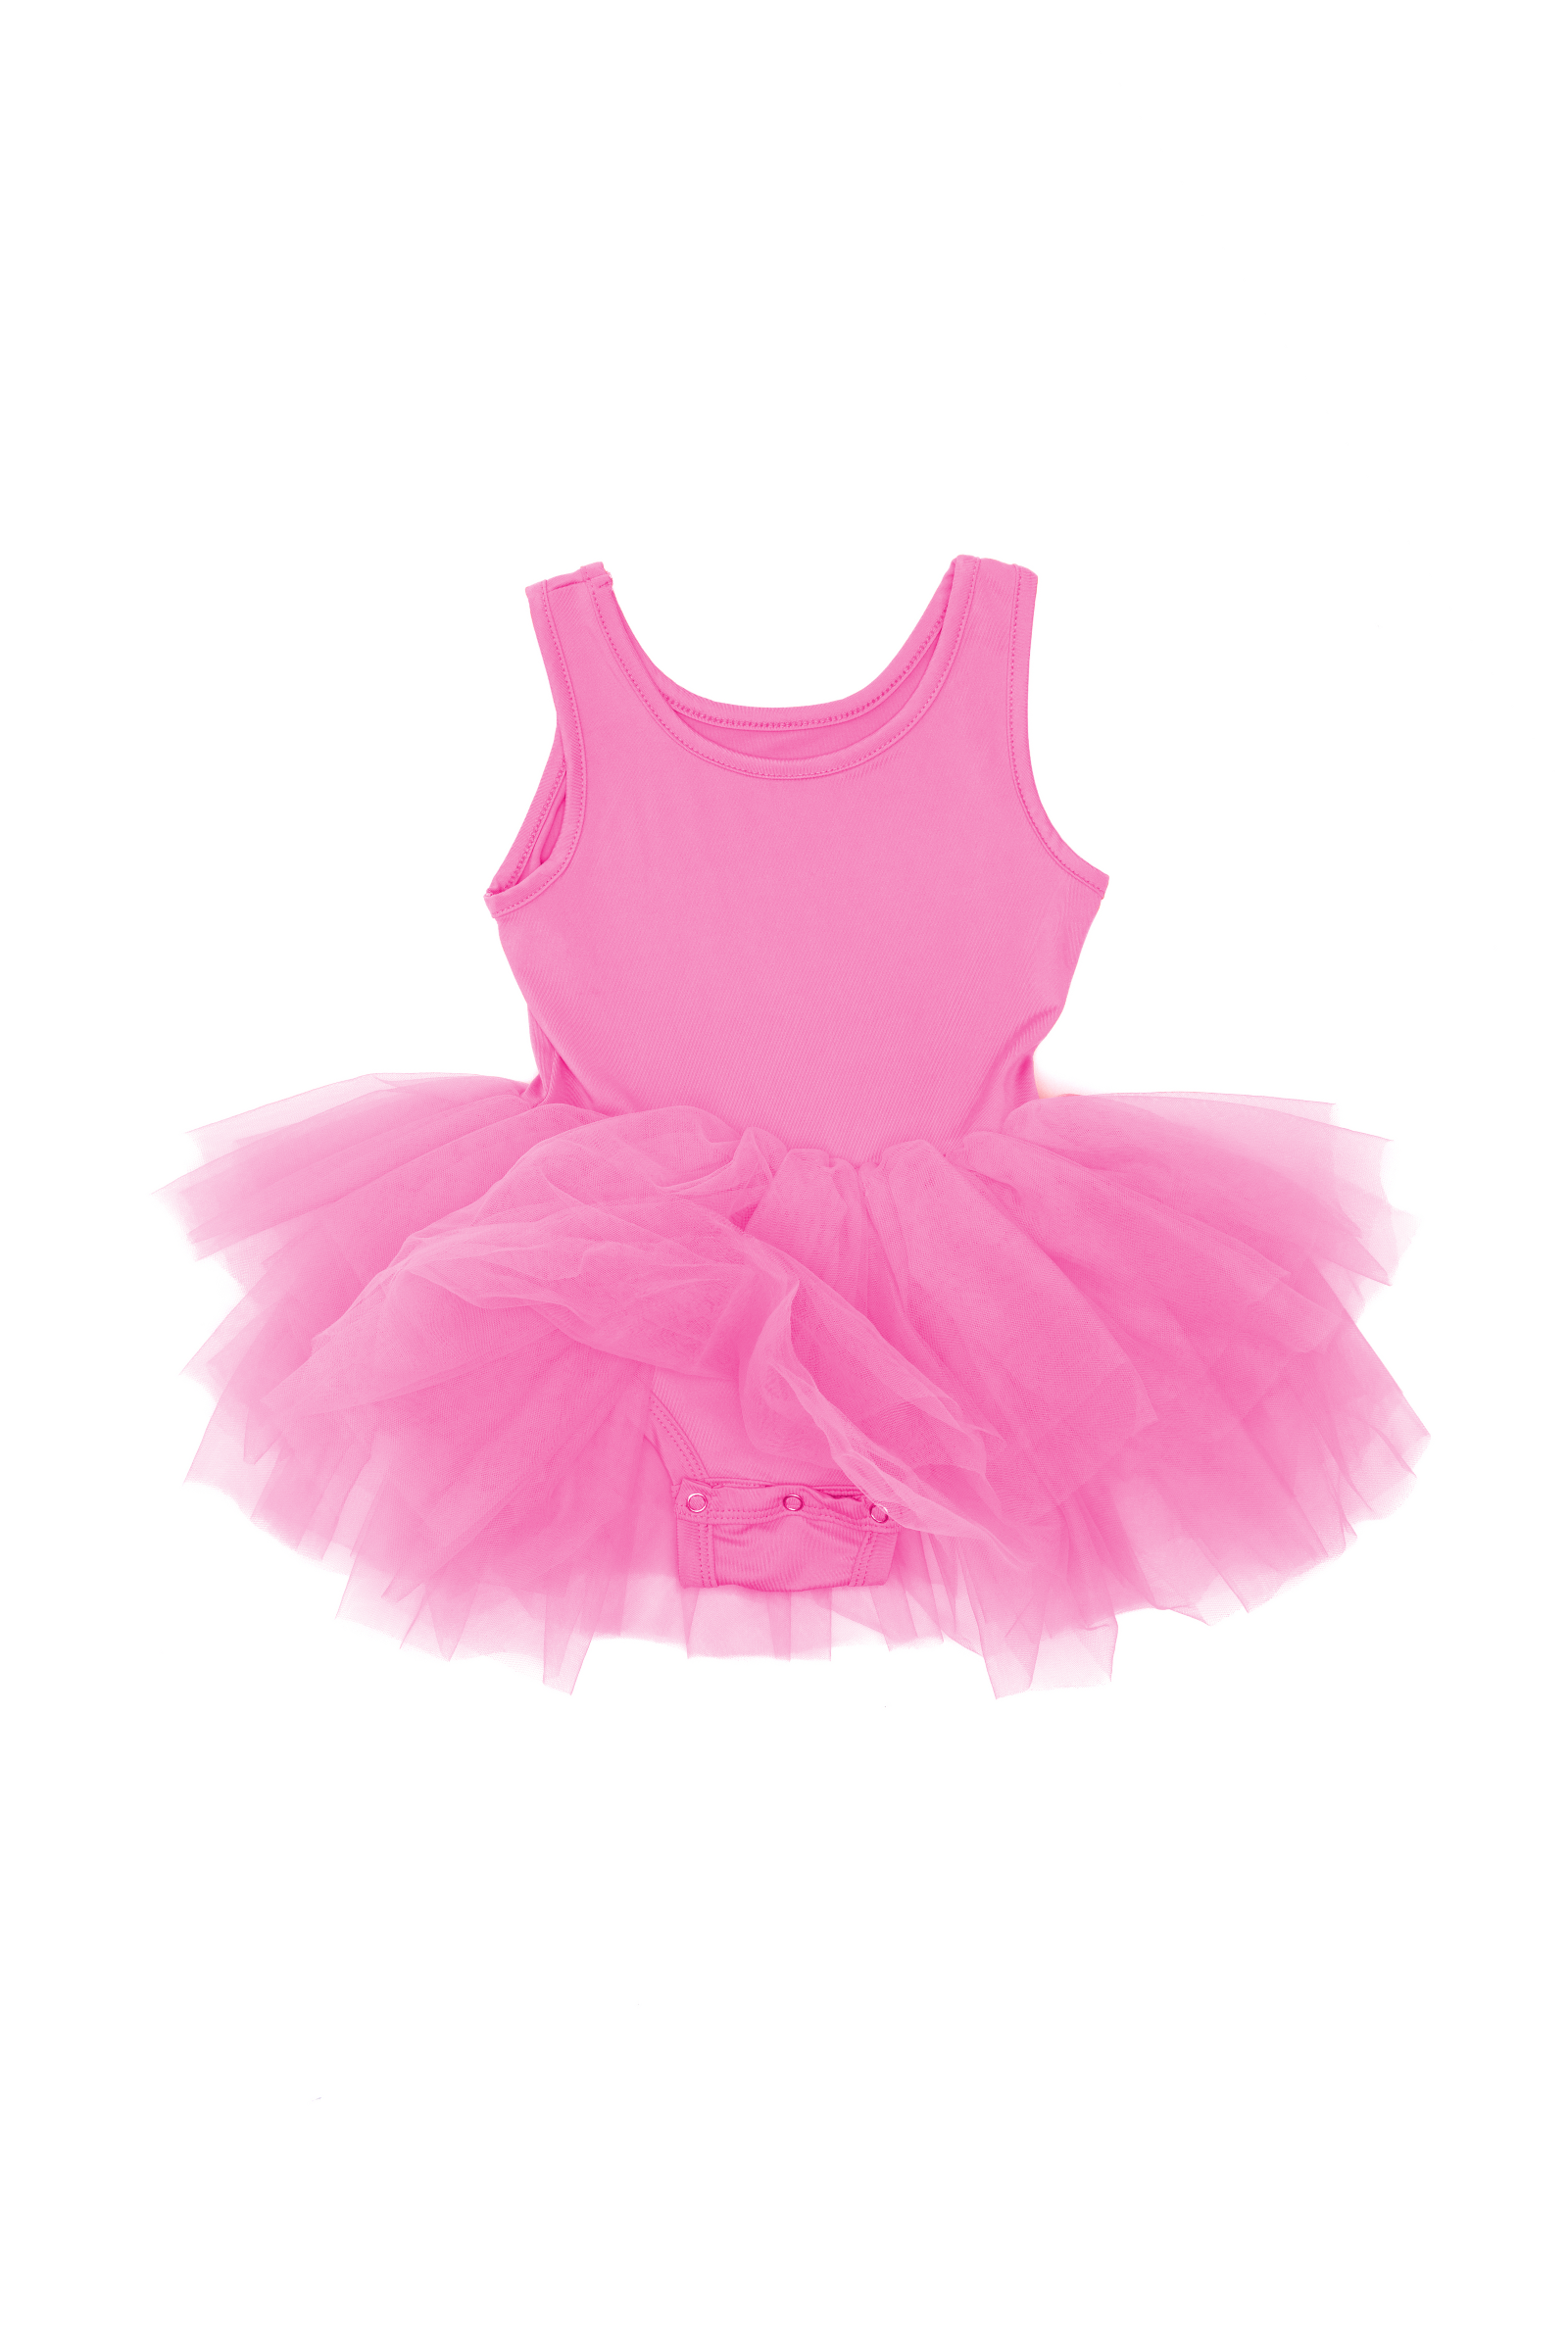 Hot Pink Ballet Tutu Dress